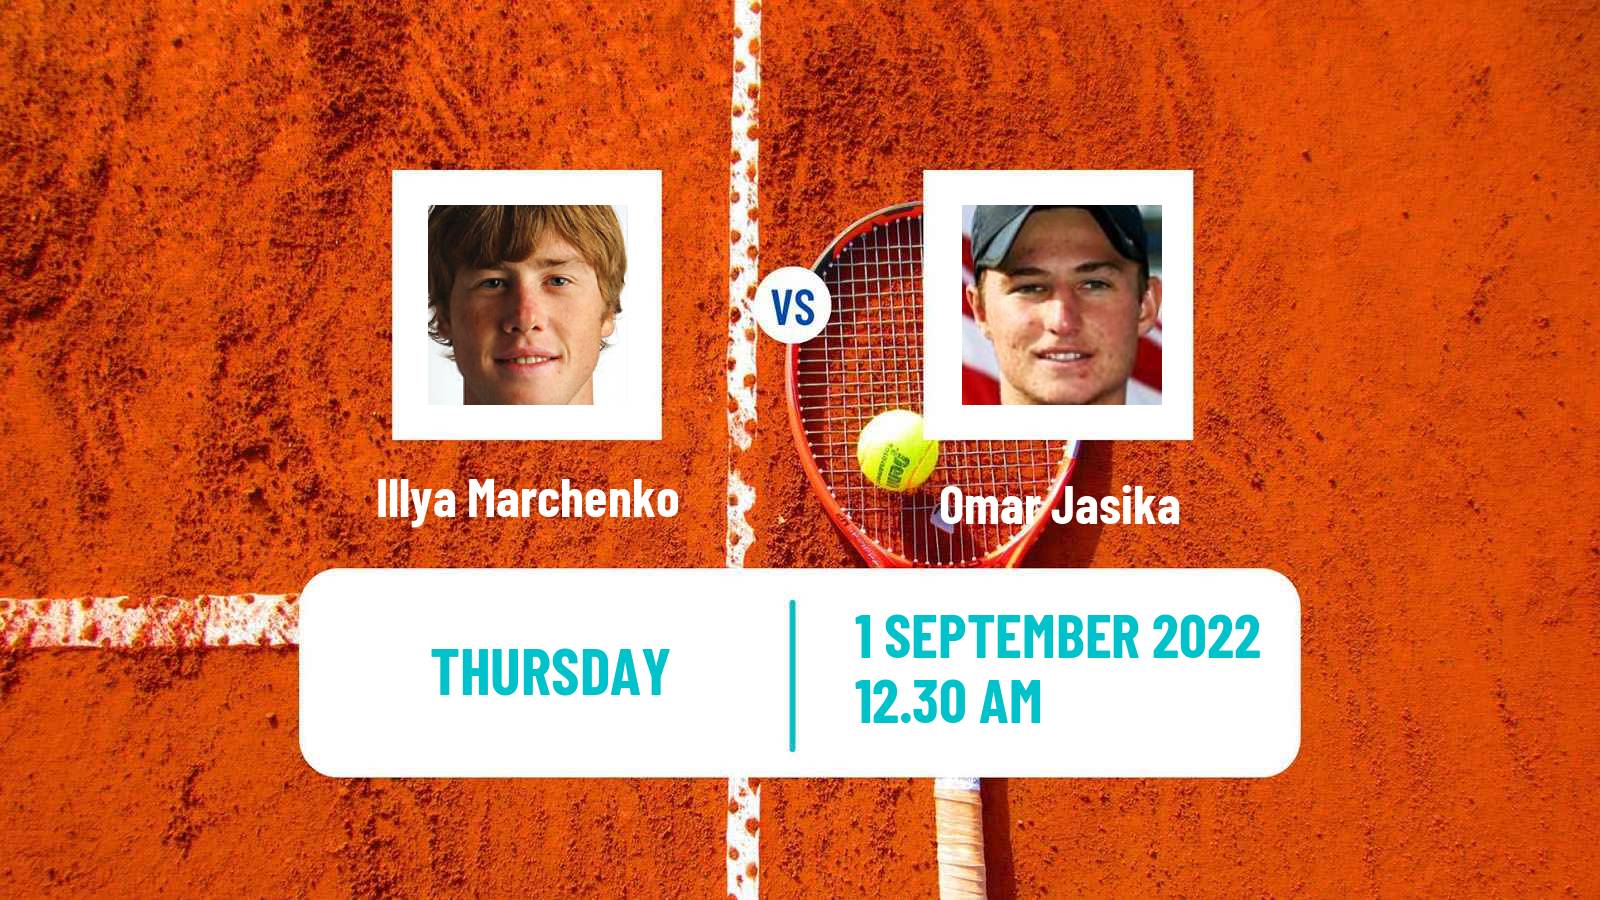 Tennis ATP Challenger Illya Marchenko - Omar Jasika